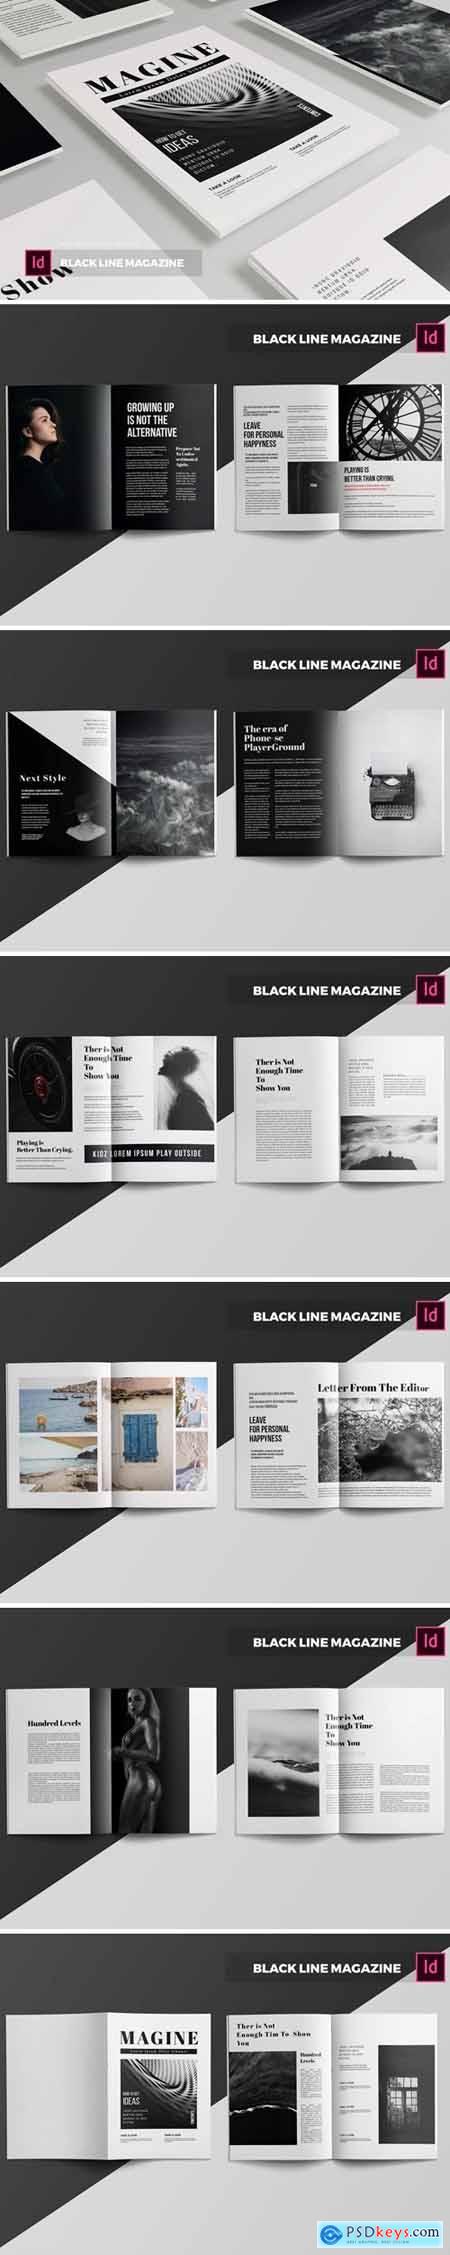 Black Line Magazine Template